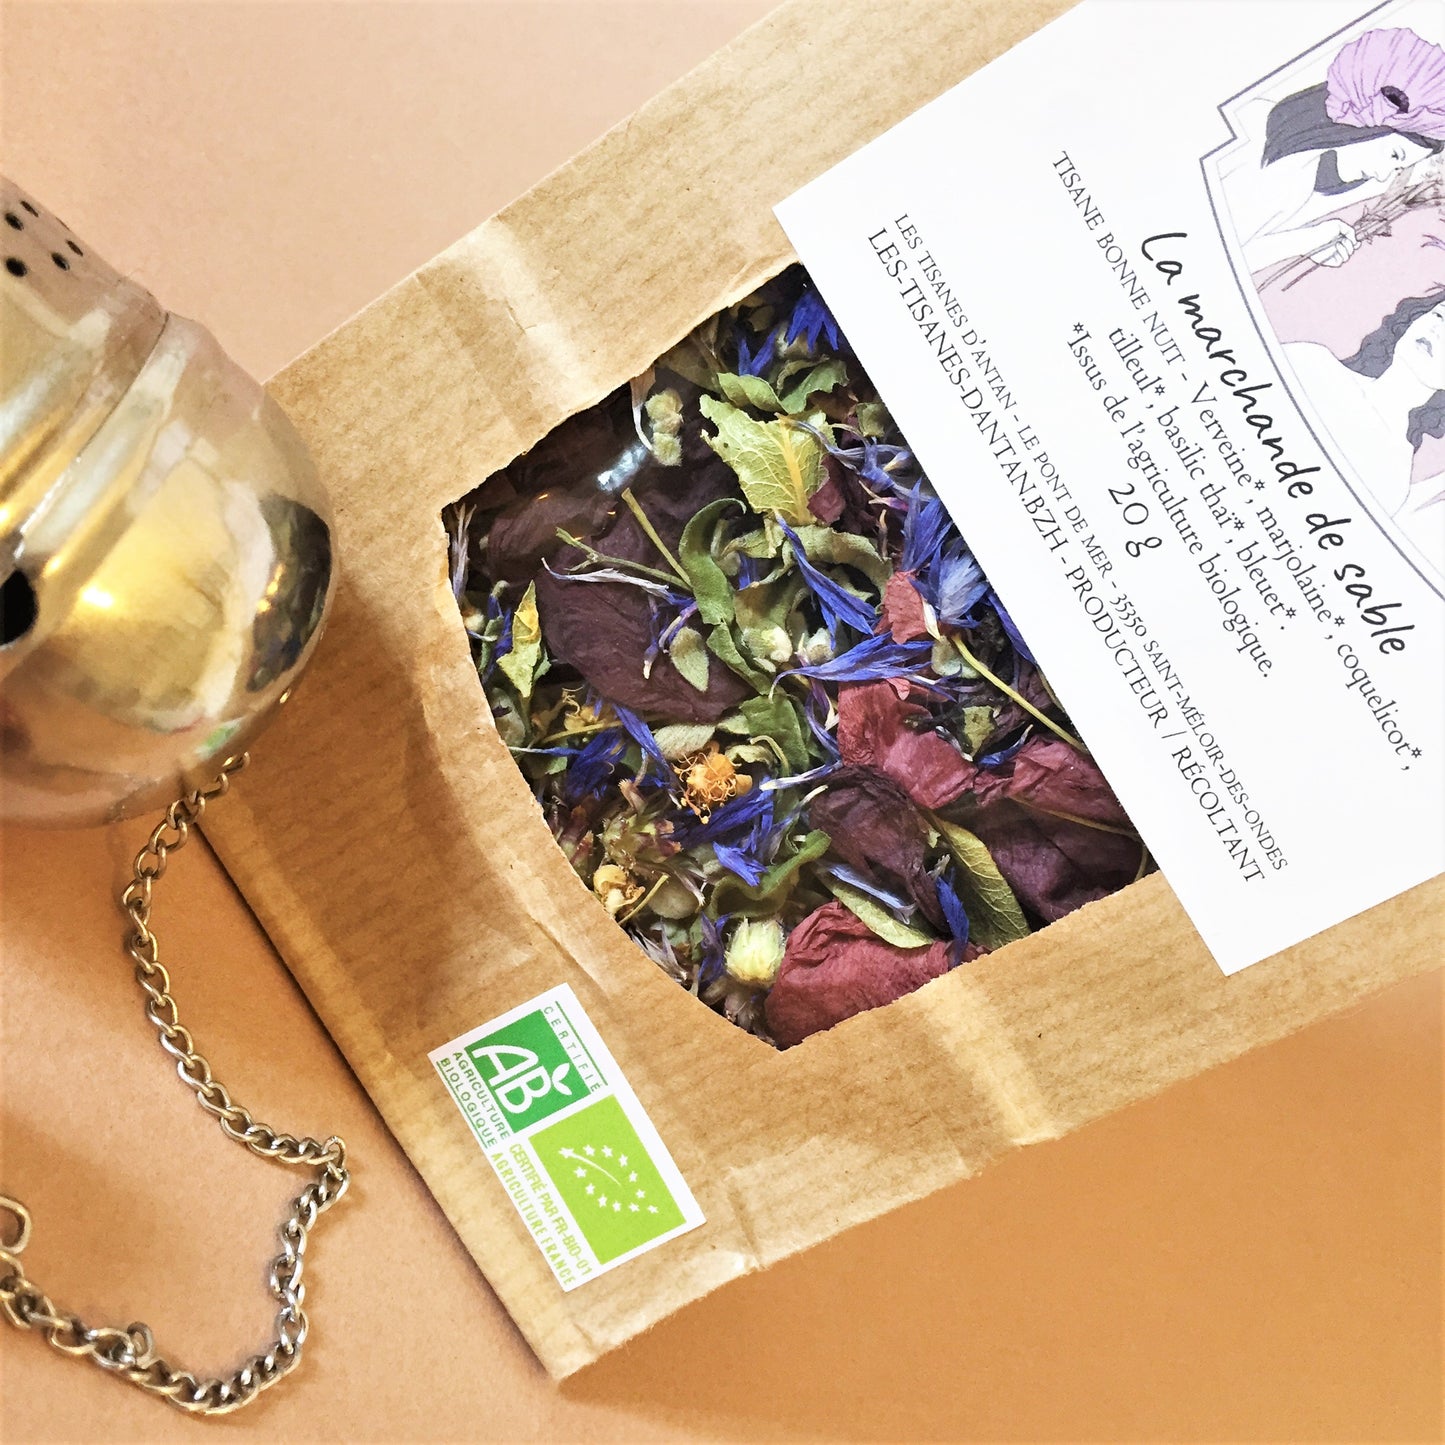 Organic good night herbal tea "The Sandwoman"